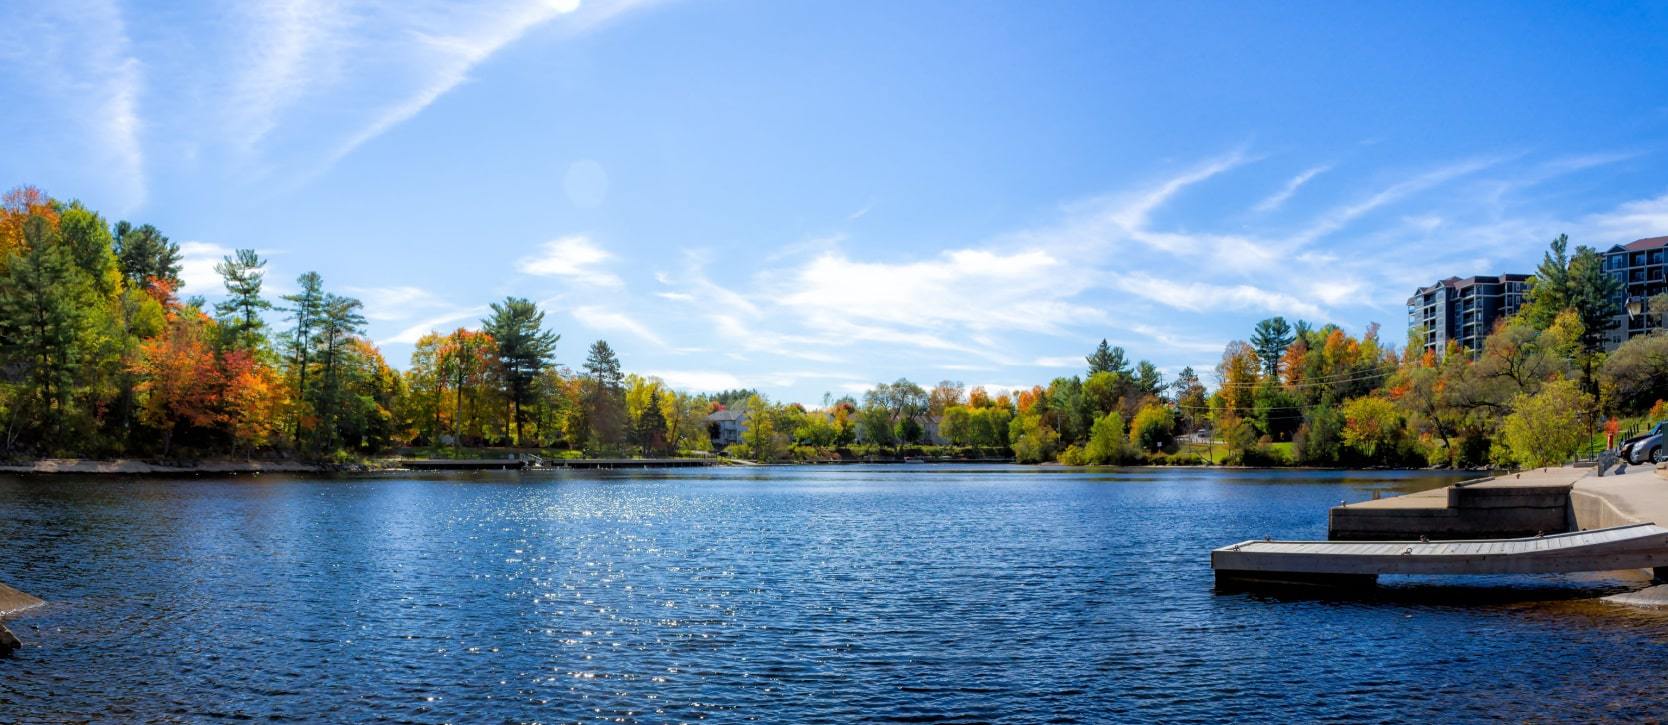 View of the bright blue lake in Bracebridge, Muskoka, Ontario